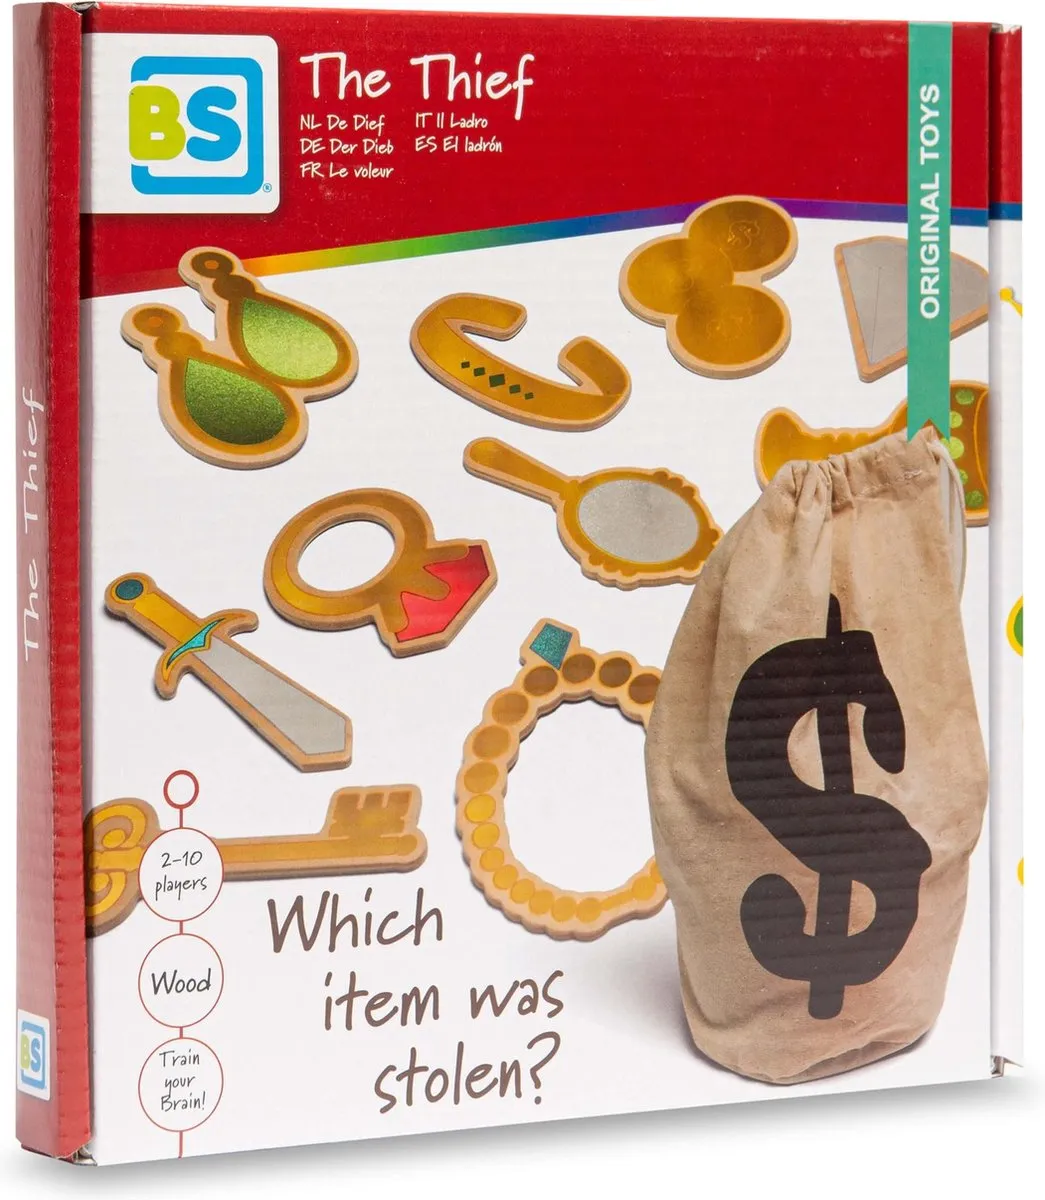 Spel - De Dief (The Thief) - 2 tot 10 Spelers - BS Toys speelgoed